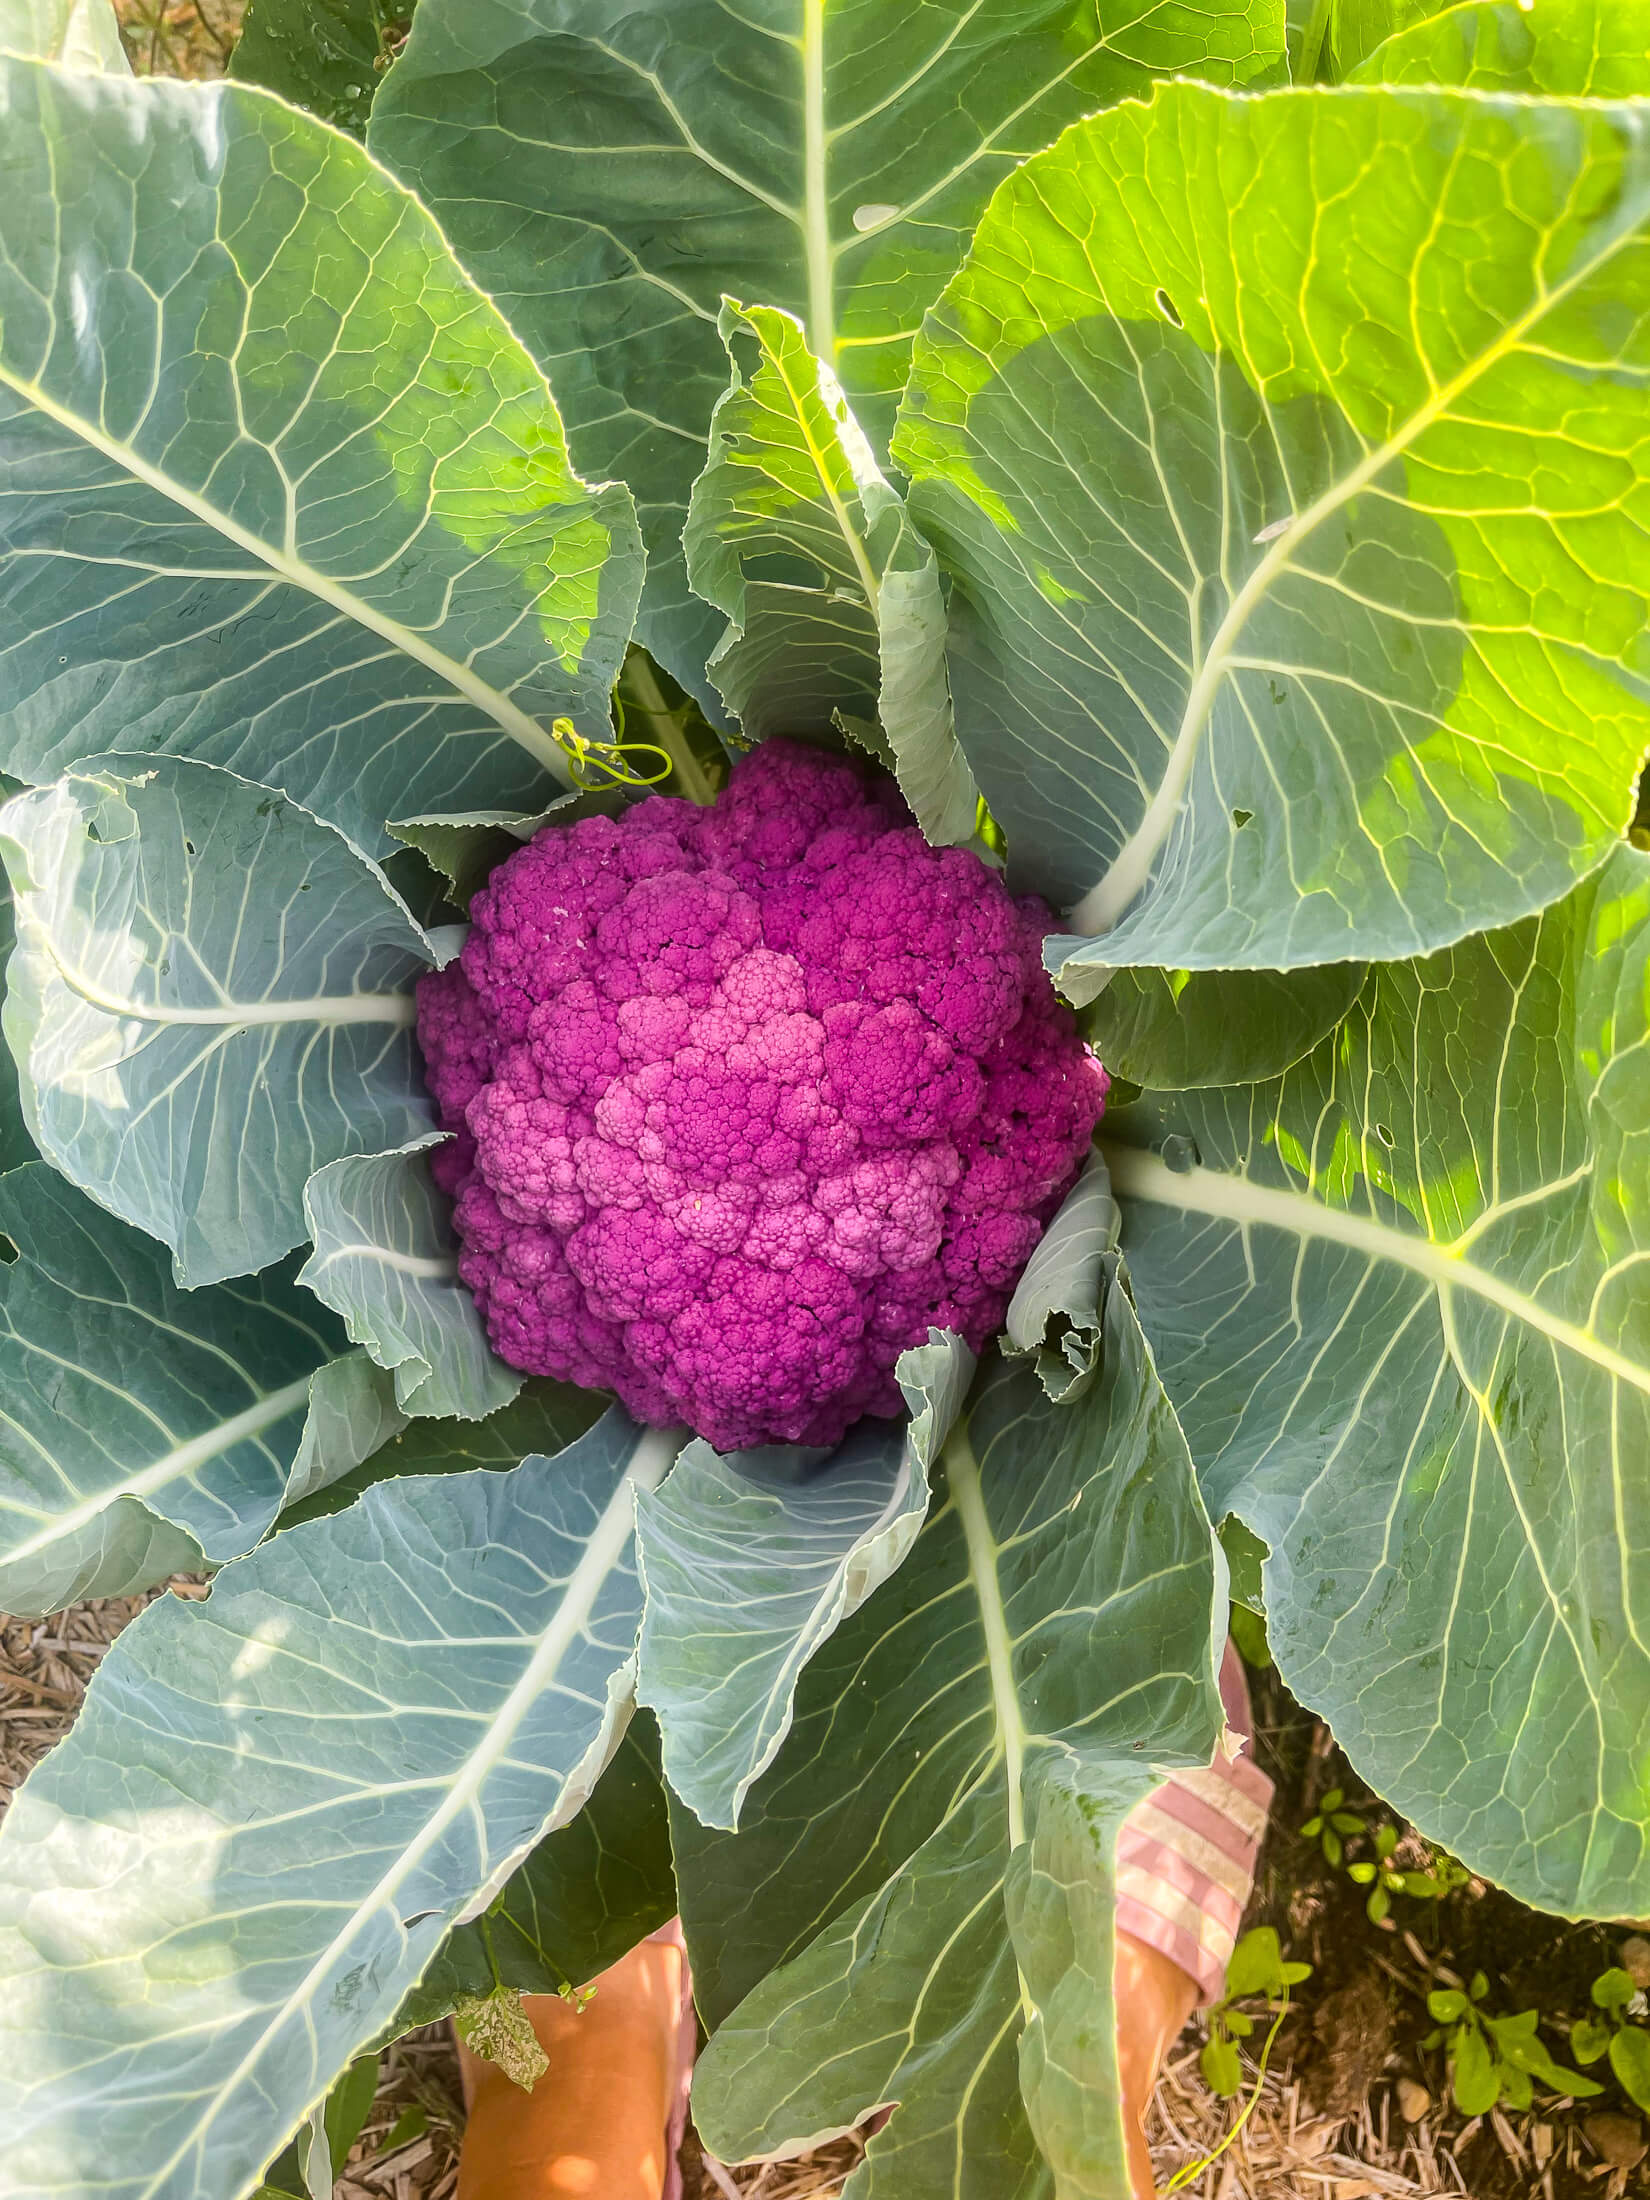 Large bright purple cauliflower. 